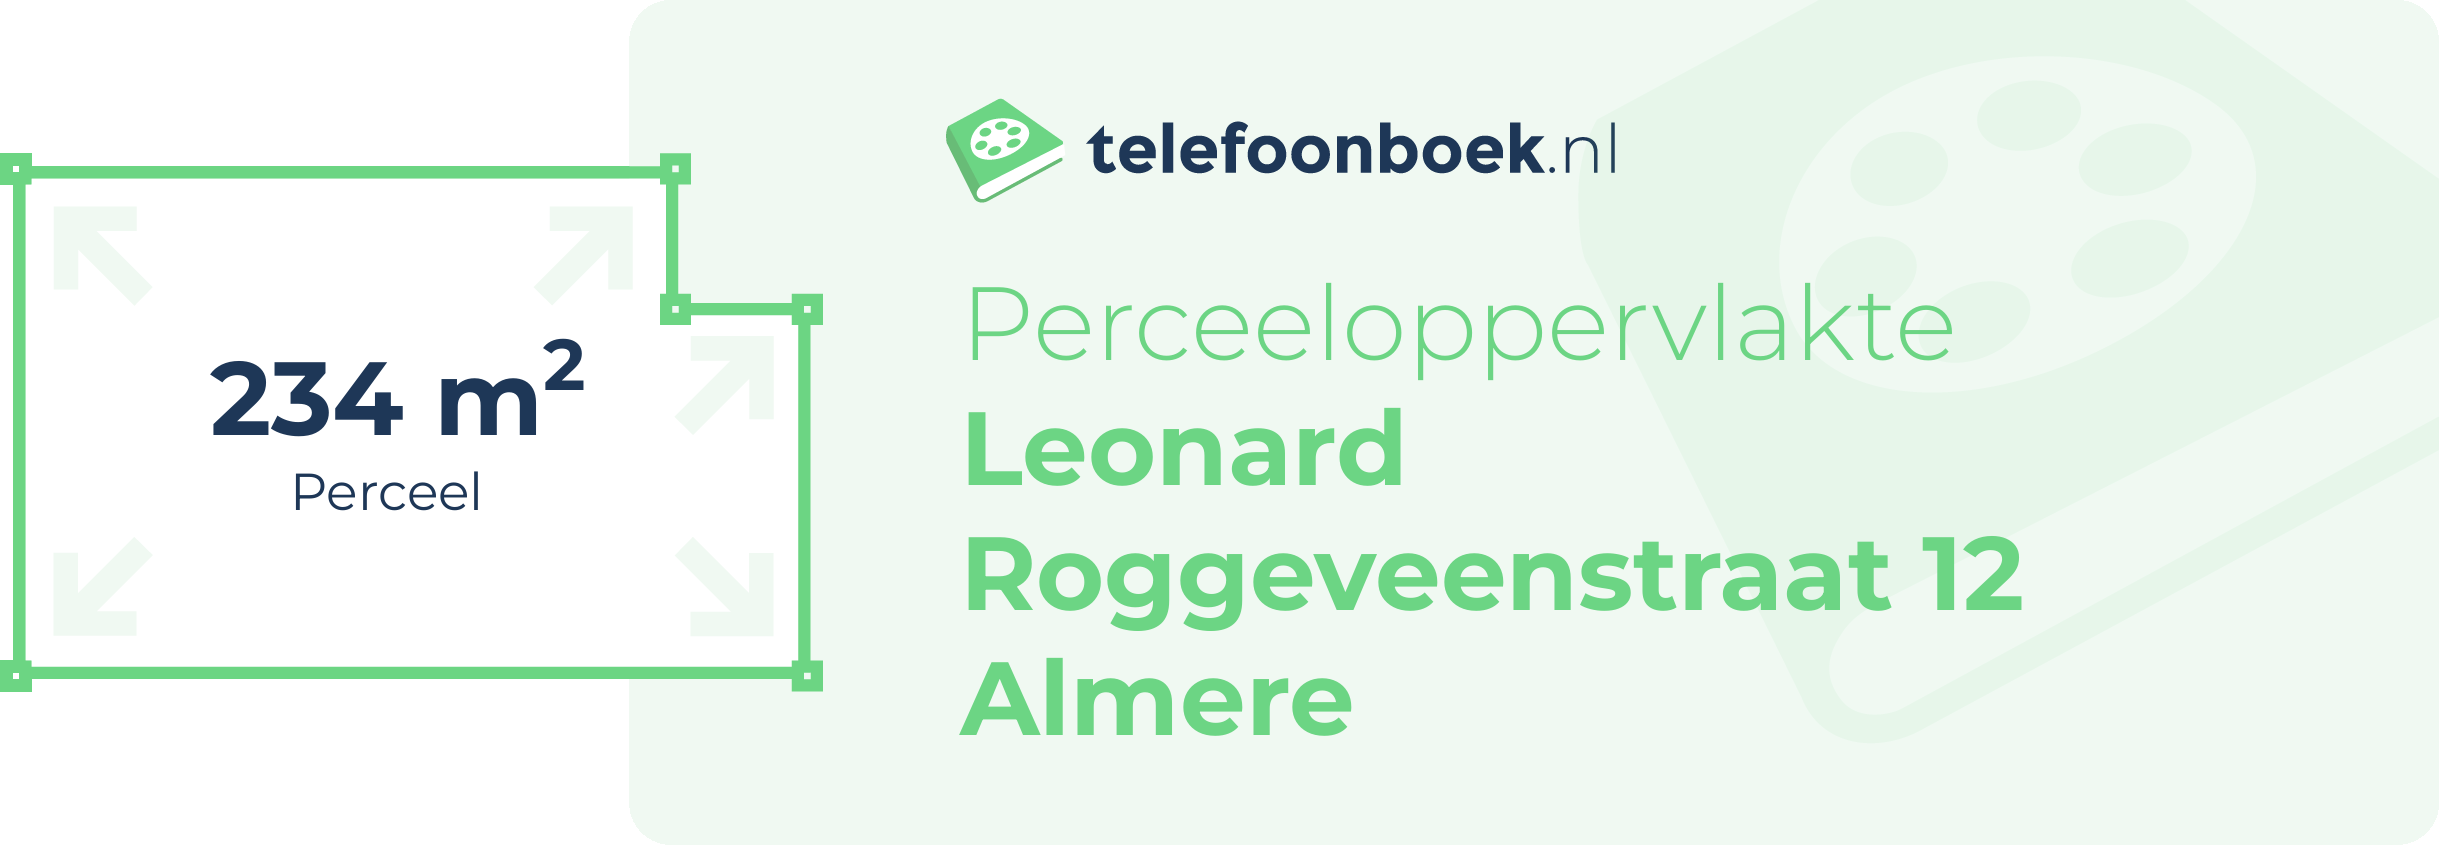 Perceeloppervlakte Leonard Roggeveenstraat 12 Almere